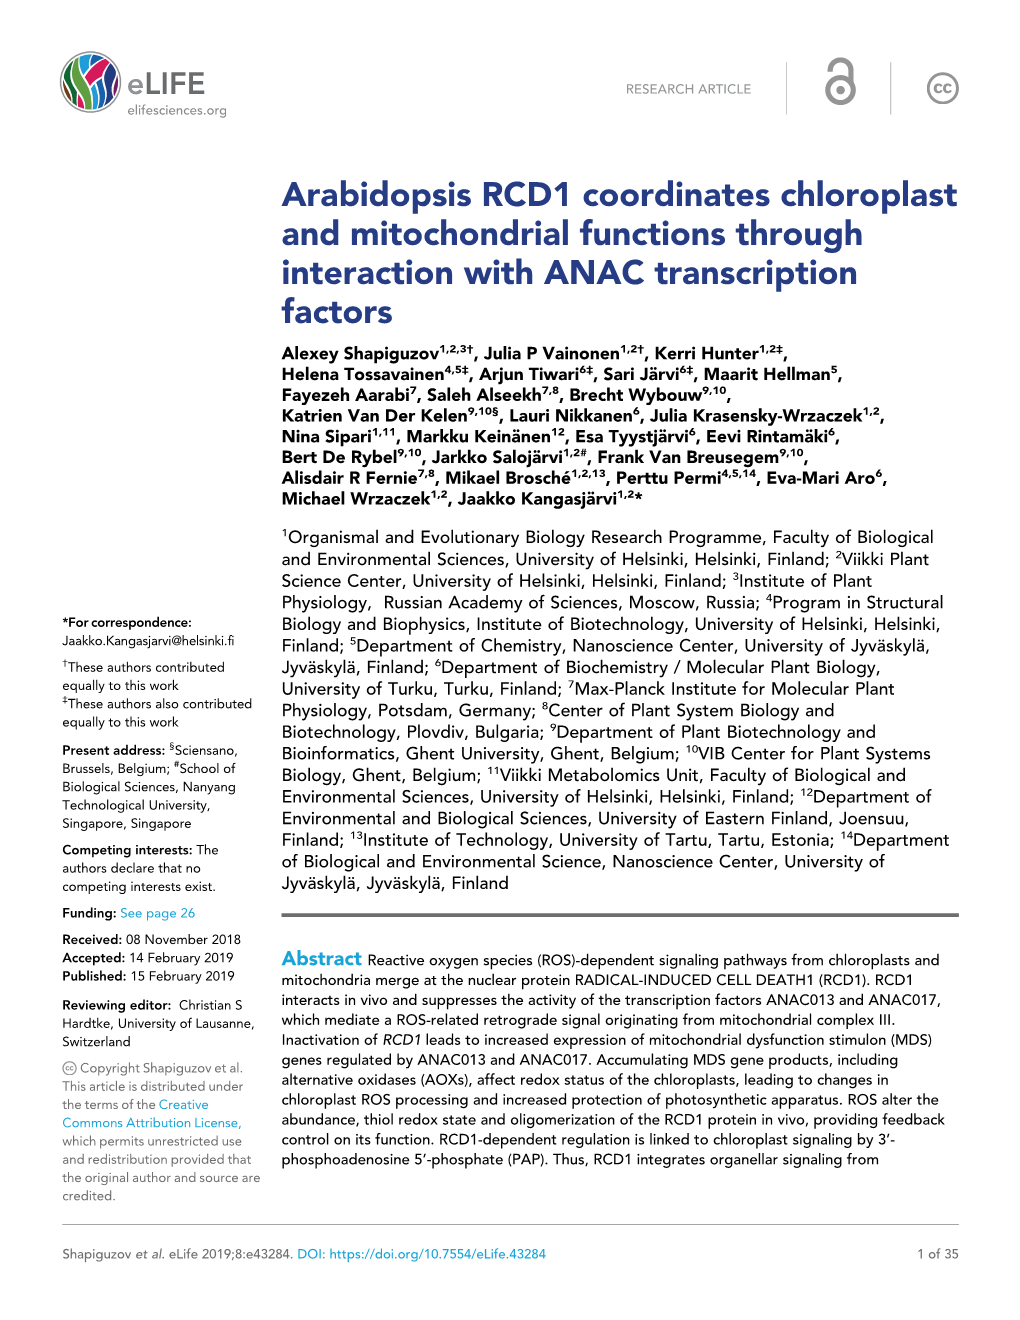 Arabidopsis RCD1 Coordinates Chloroplast and Mitochondrial